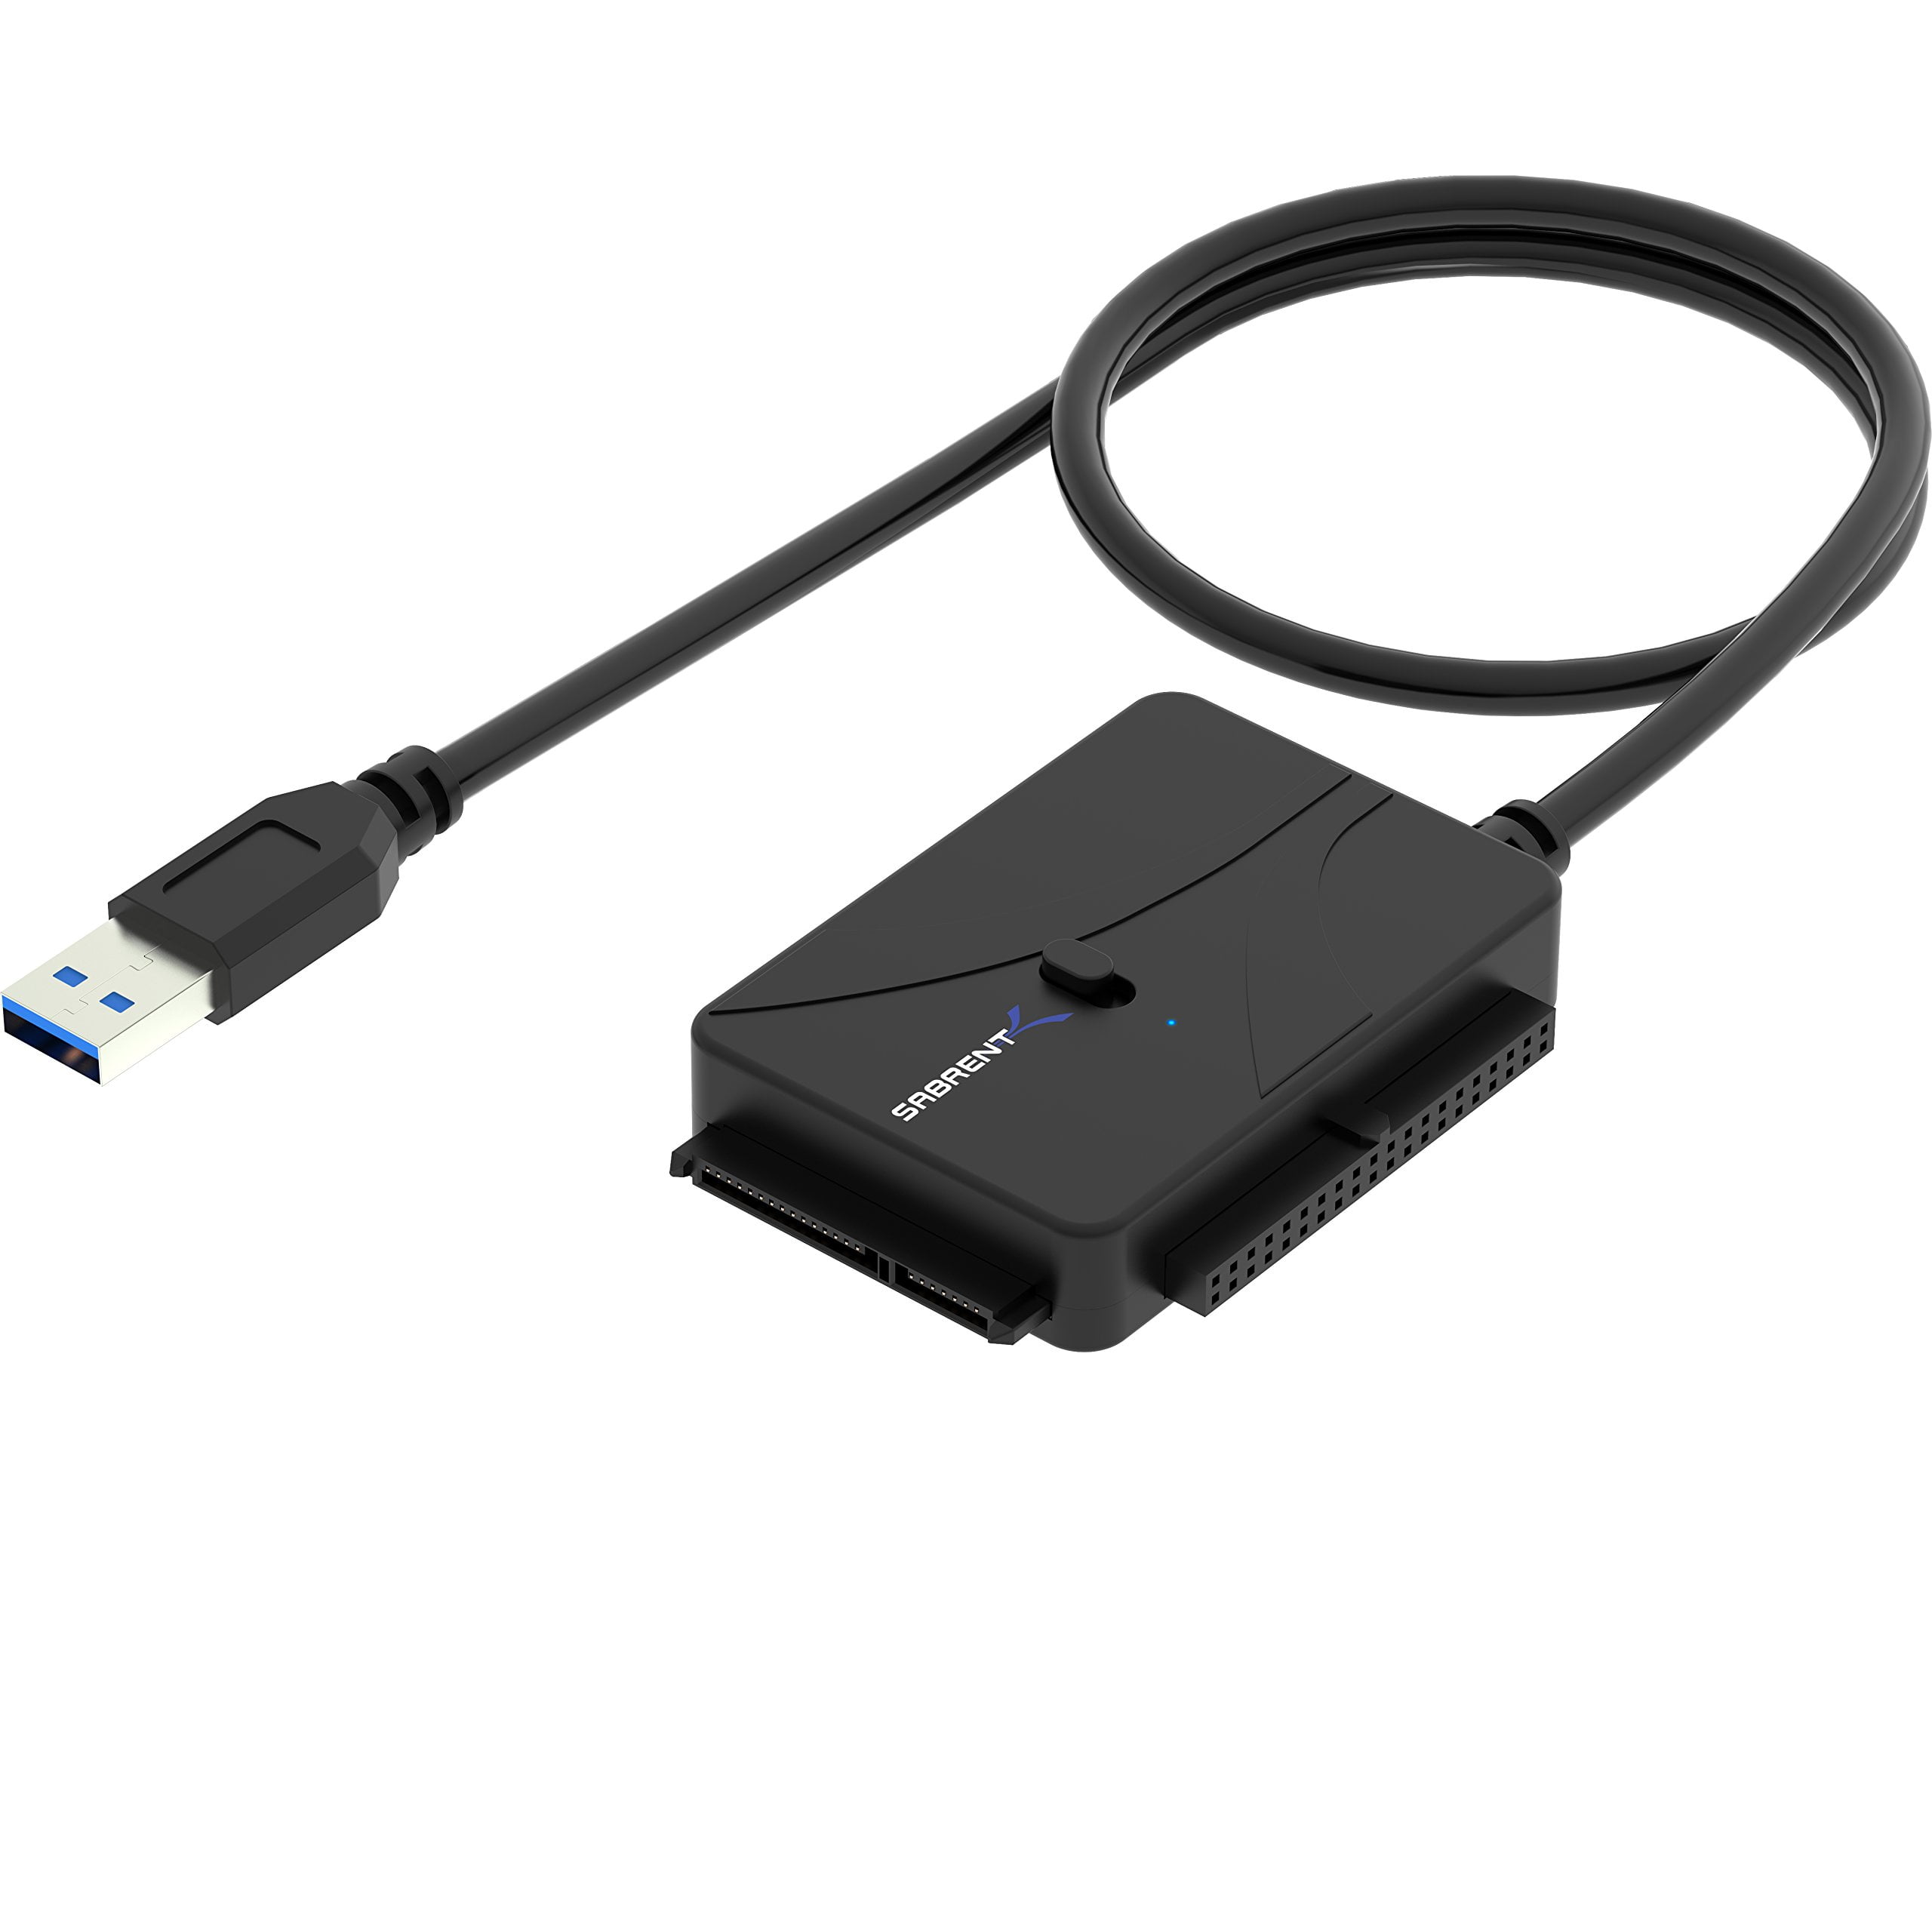 USB 3.0 to SATA Converter Adapter For 2.5"/3.5" SATA/IDE/SSD Hard Drive 